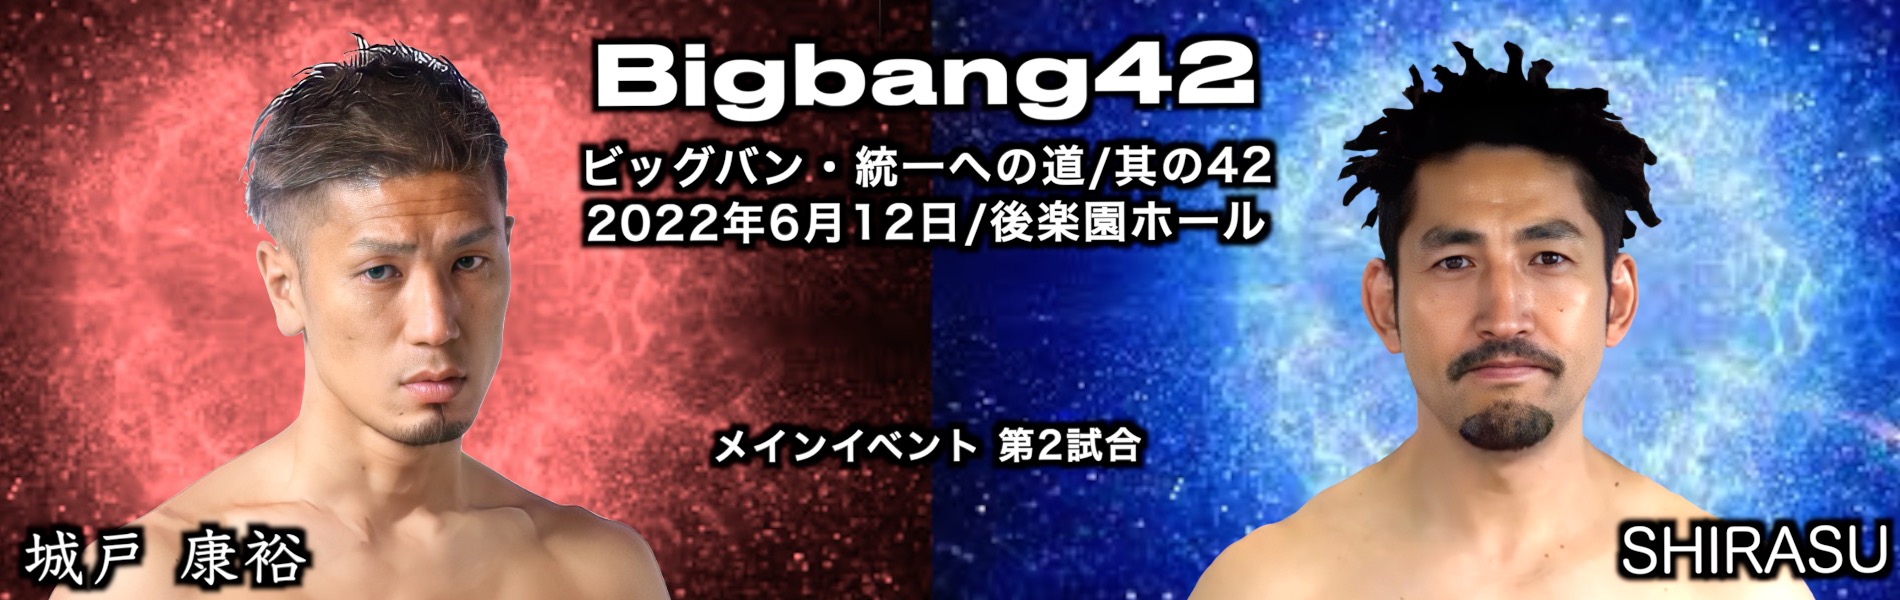 Bigbang42 大会情報